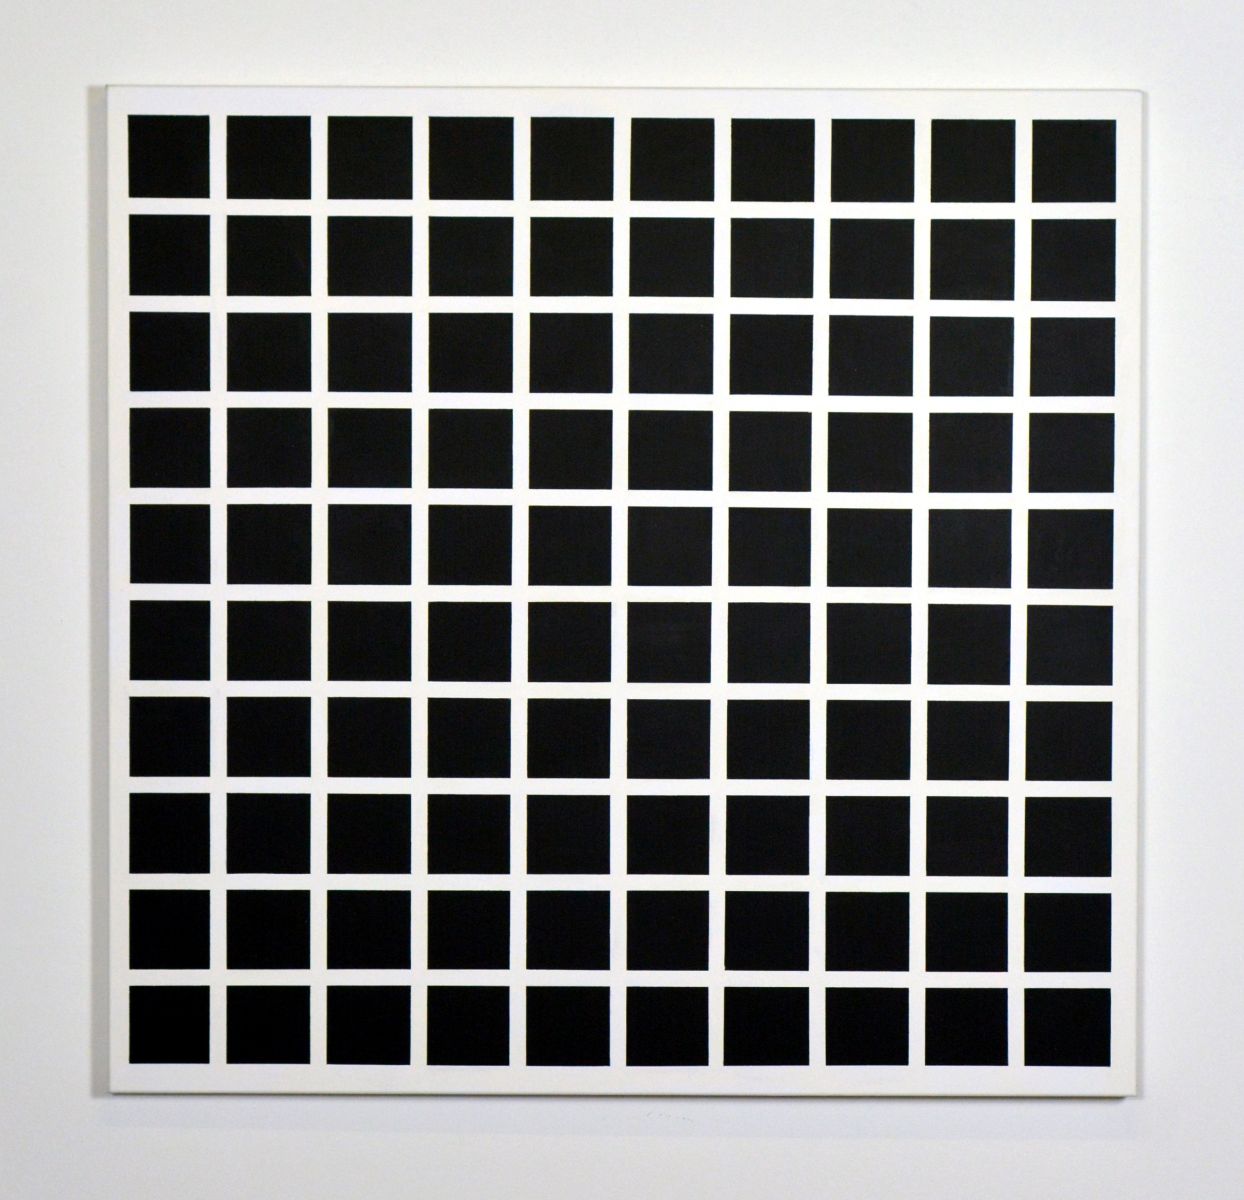 Black Squares on white Square-christian eder-paintings